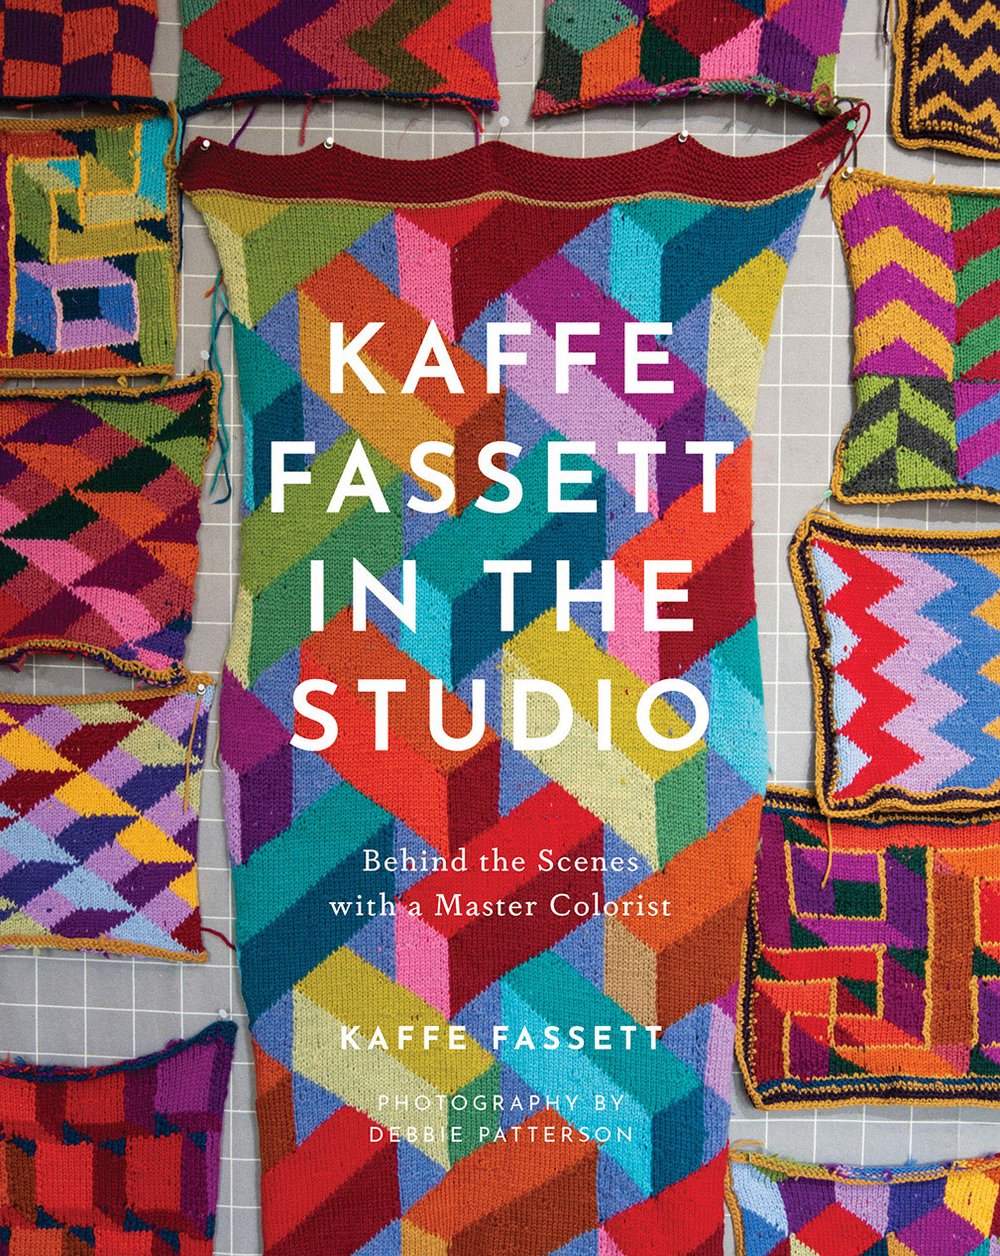 Kaffe Fassett's Quilts In Burano